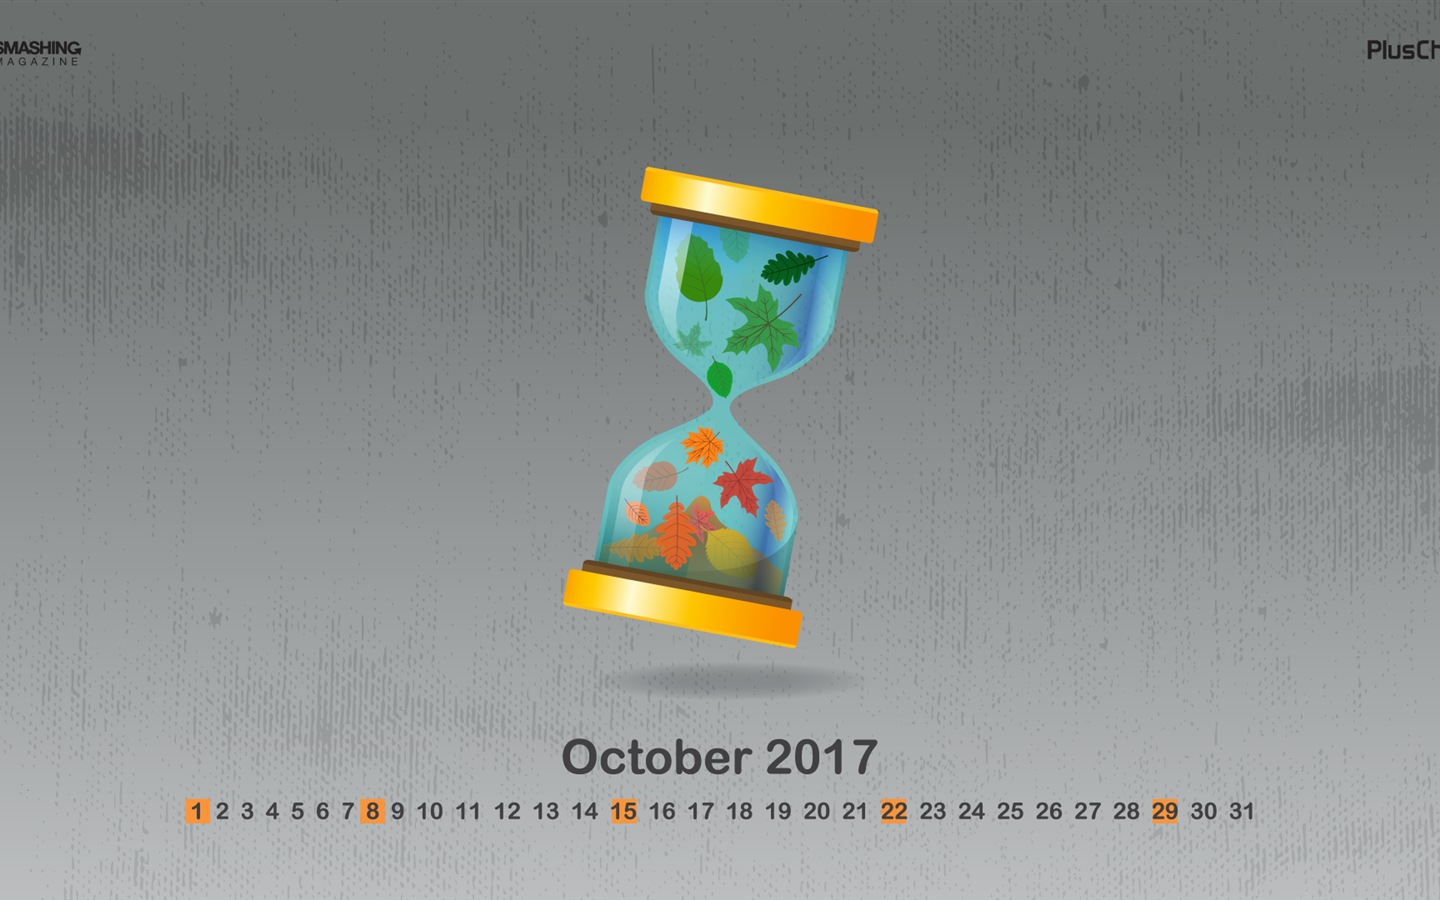 October 2017 calendar wallpaper #9 - 1440x900